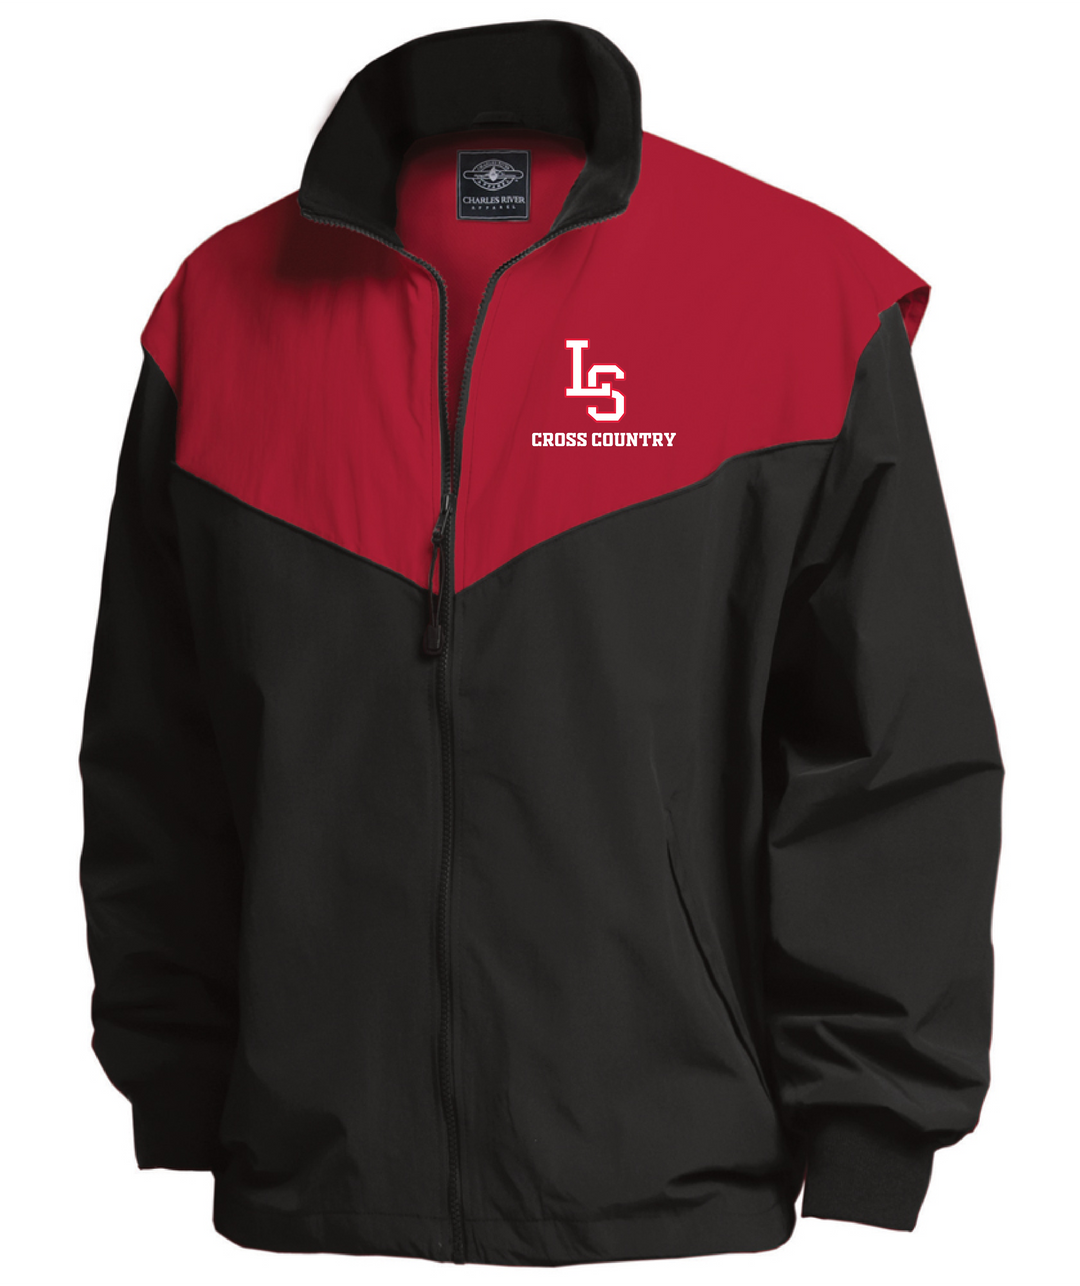 Lincoln Sudbury Cross Country Championship Jacket (9971)